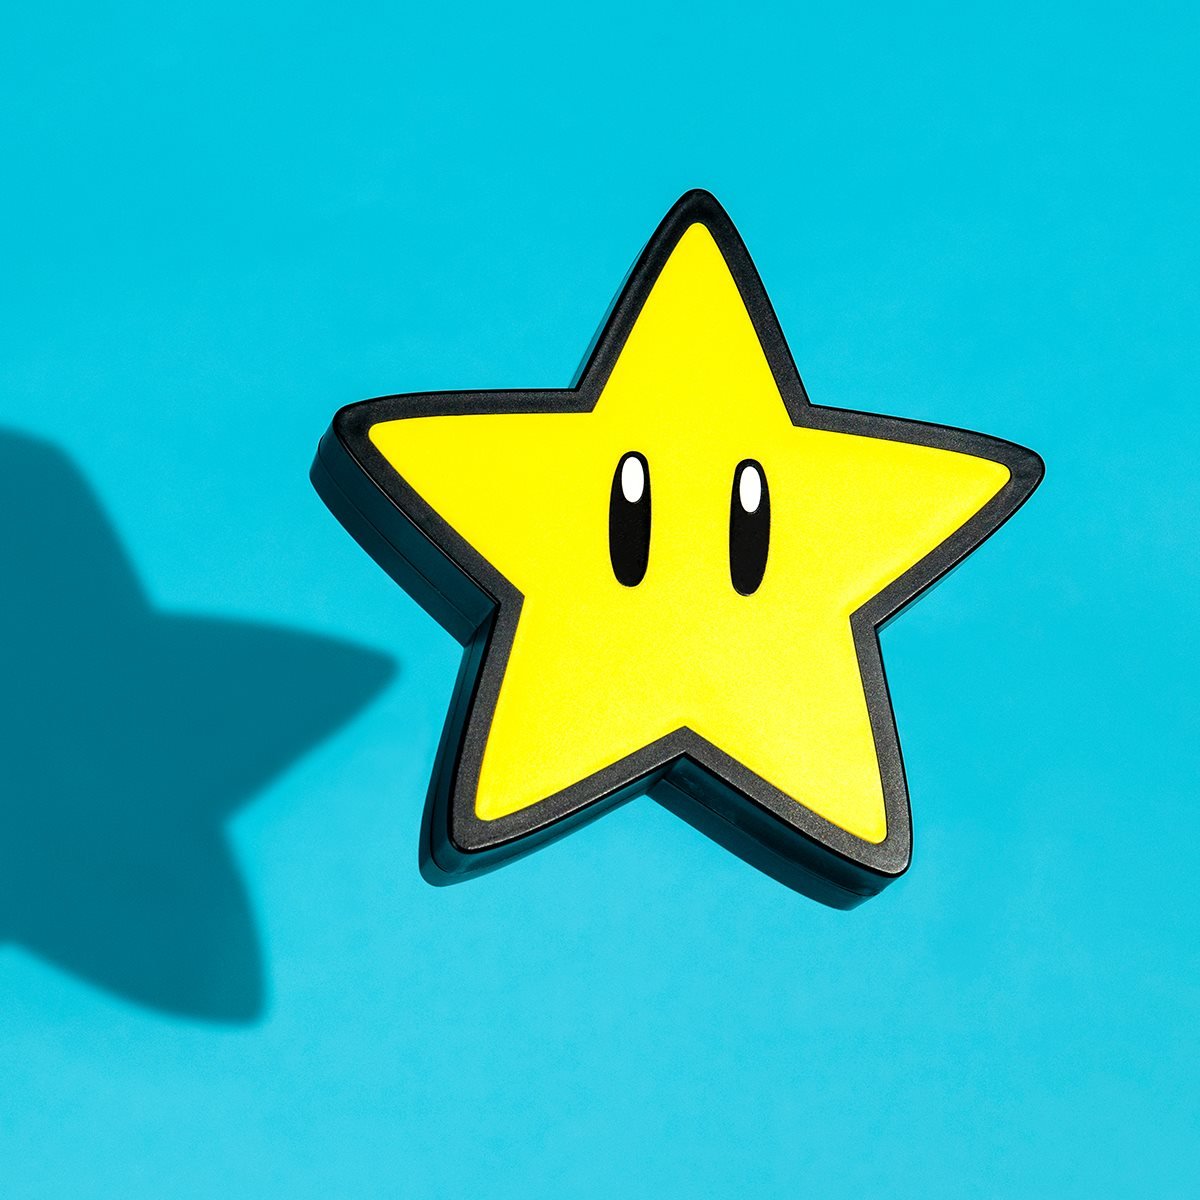 Super Mario™ Super Star Light with Sound - Merchandise - Nintendo